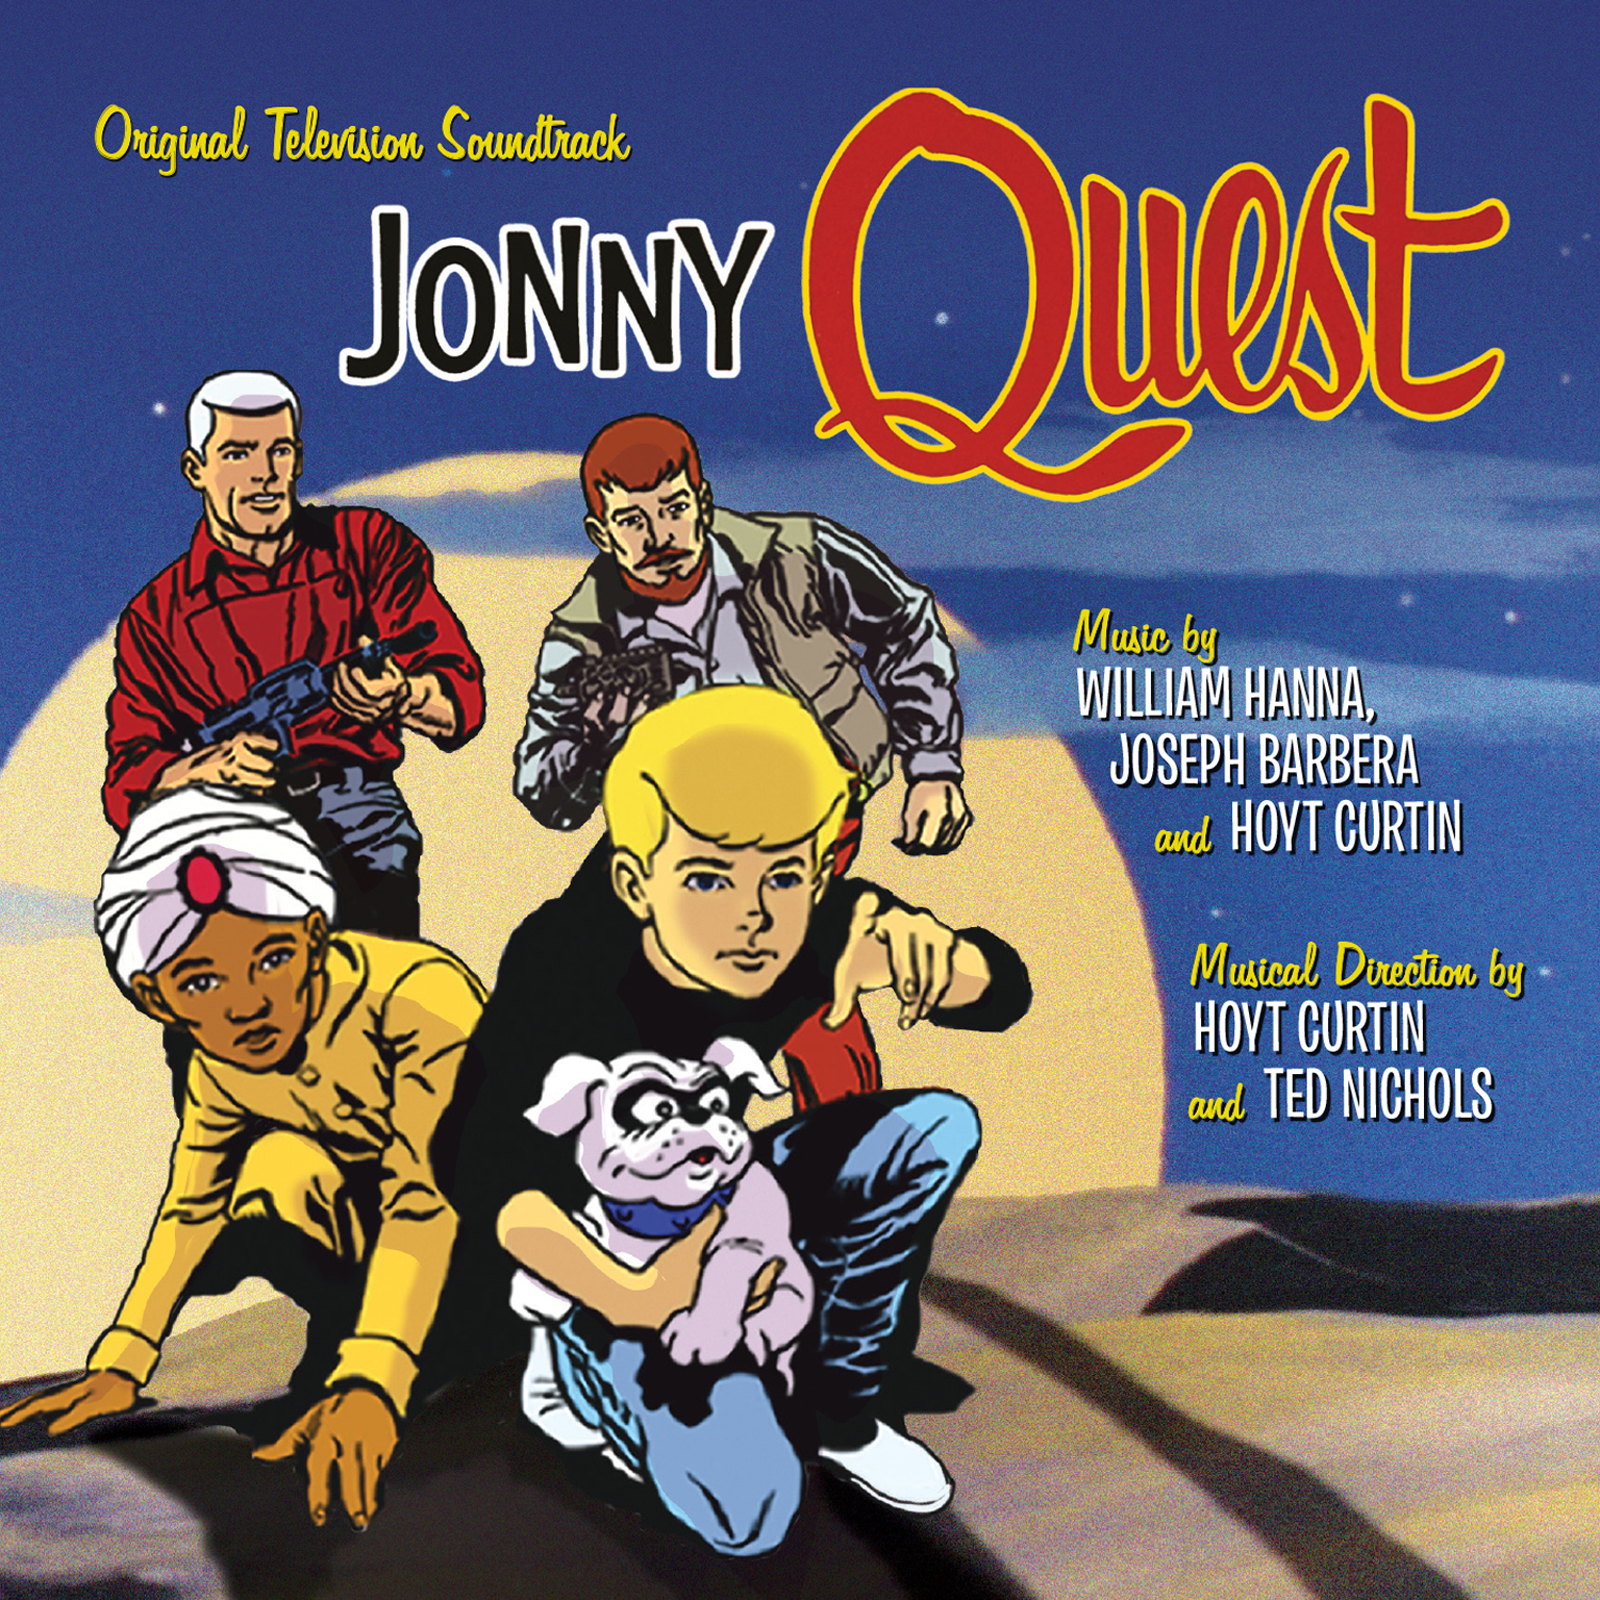 Jonny Quest Backgrounds on Wallpapers Vista